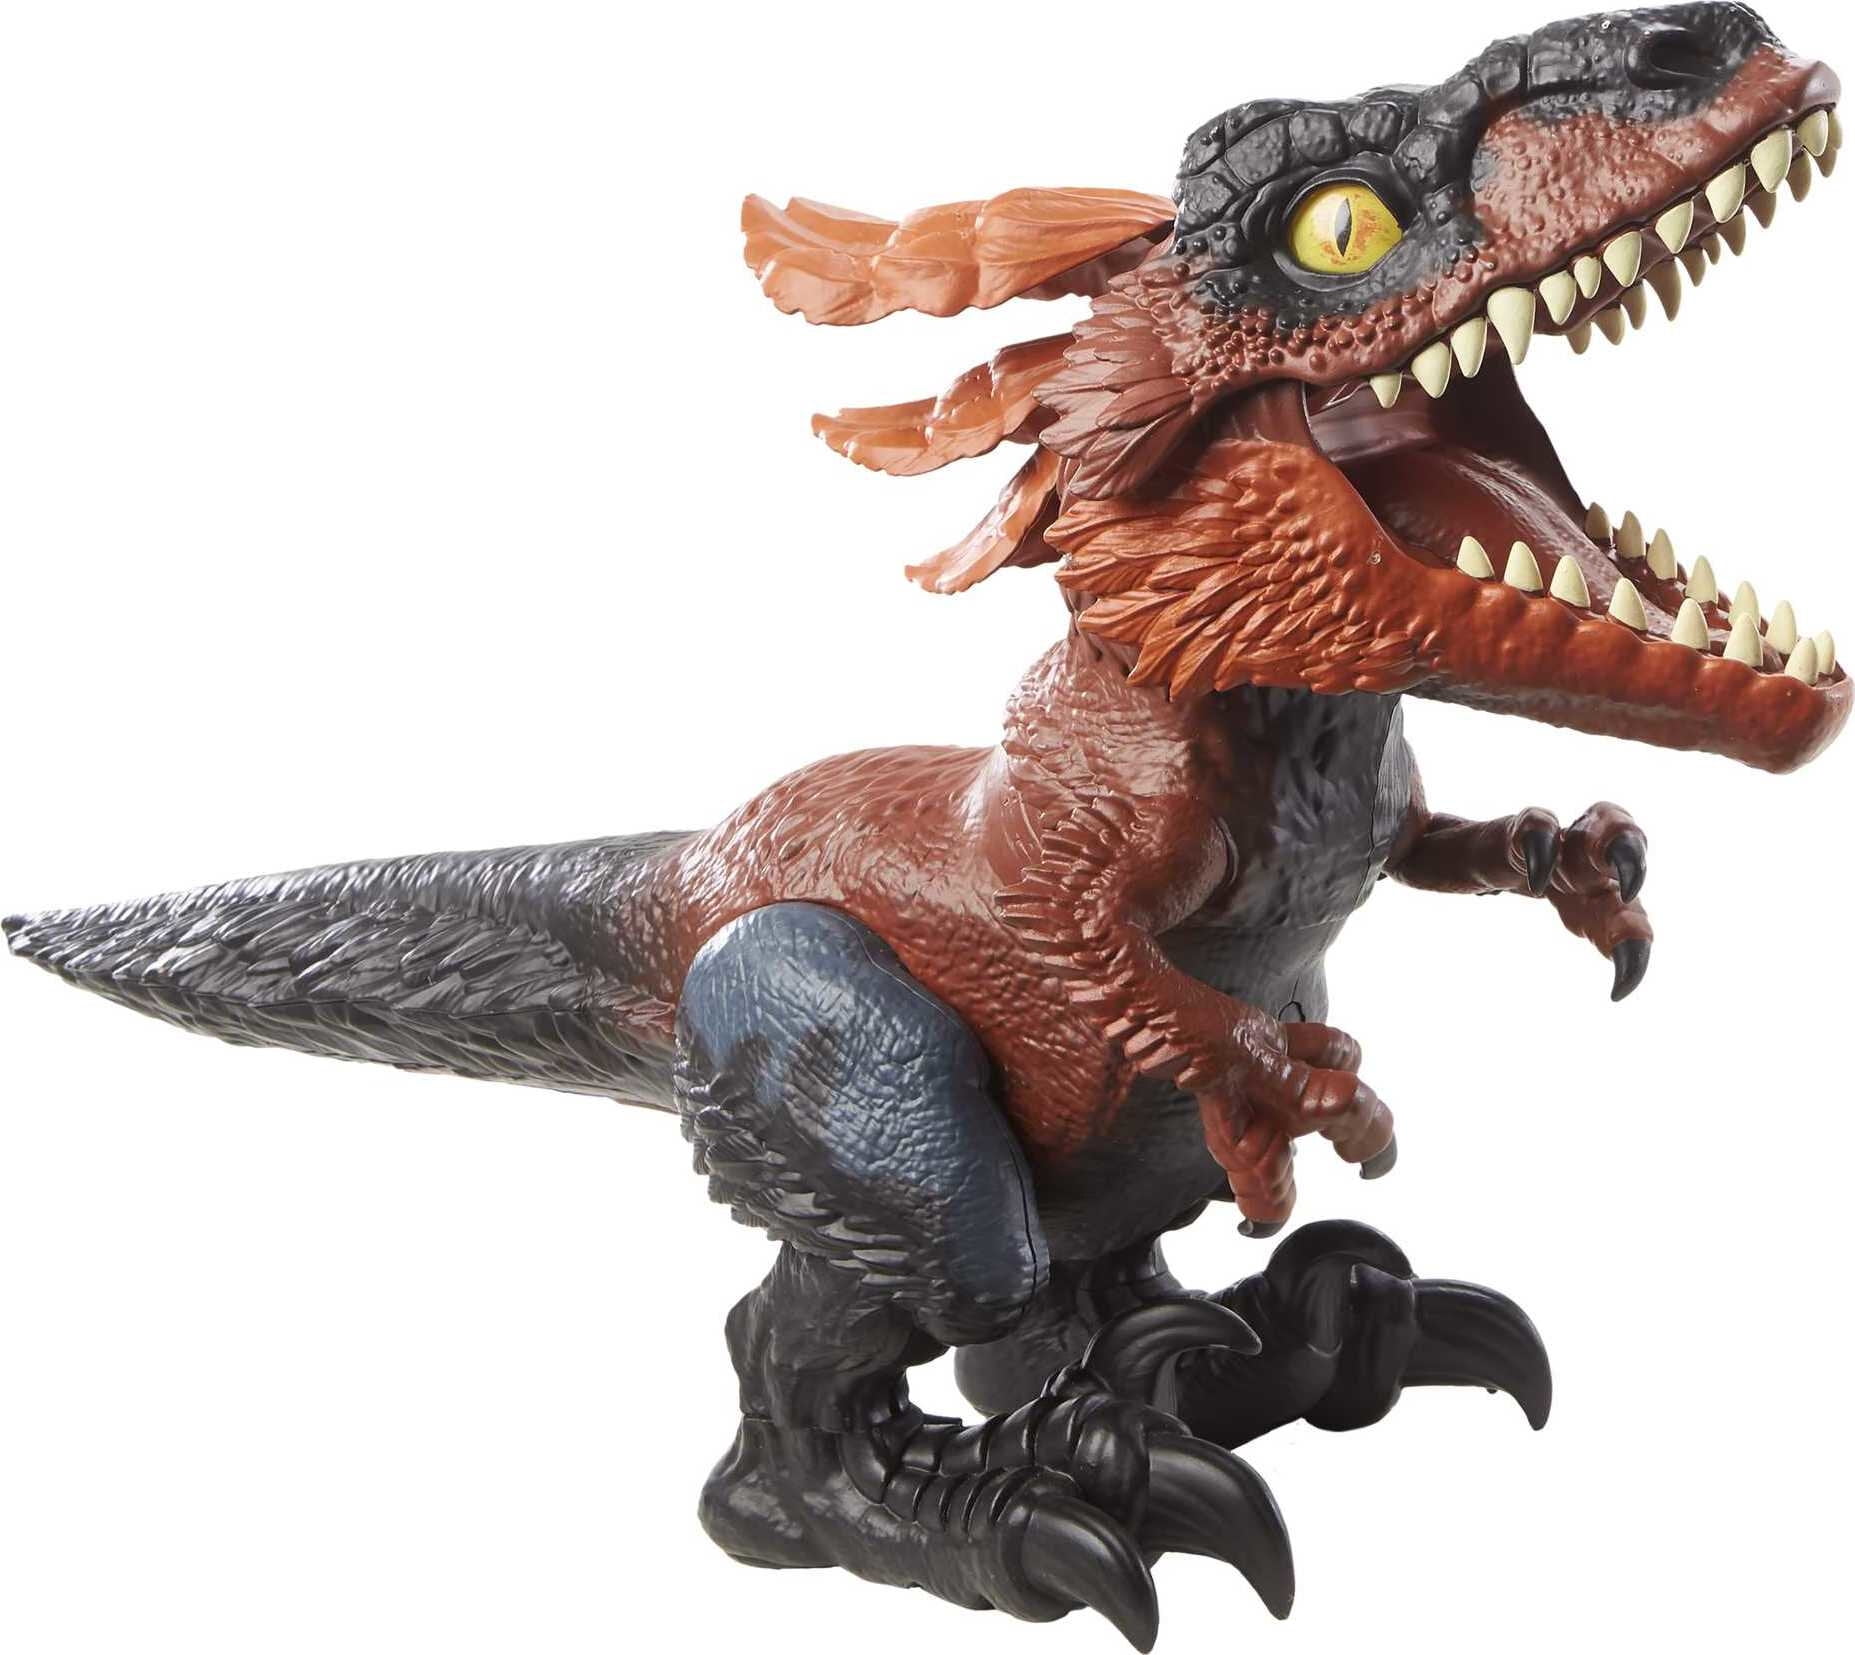 Jurassic World Dominion Uncaged Ultimate Pyroraptor Interactive Dinosaur Action Figure Toy